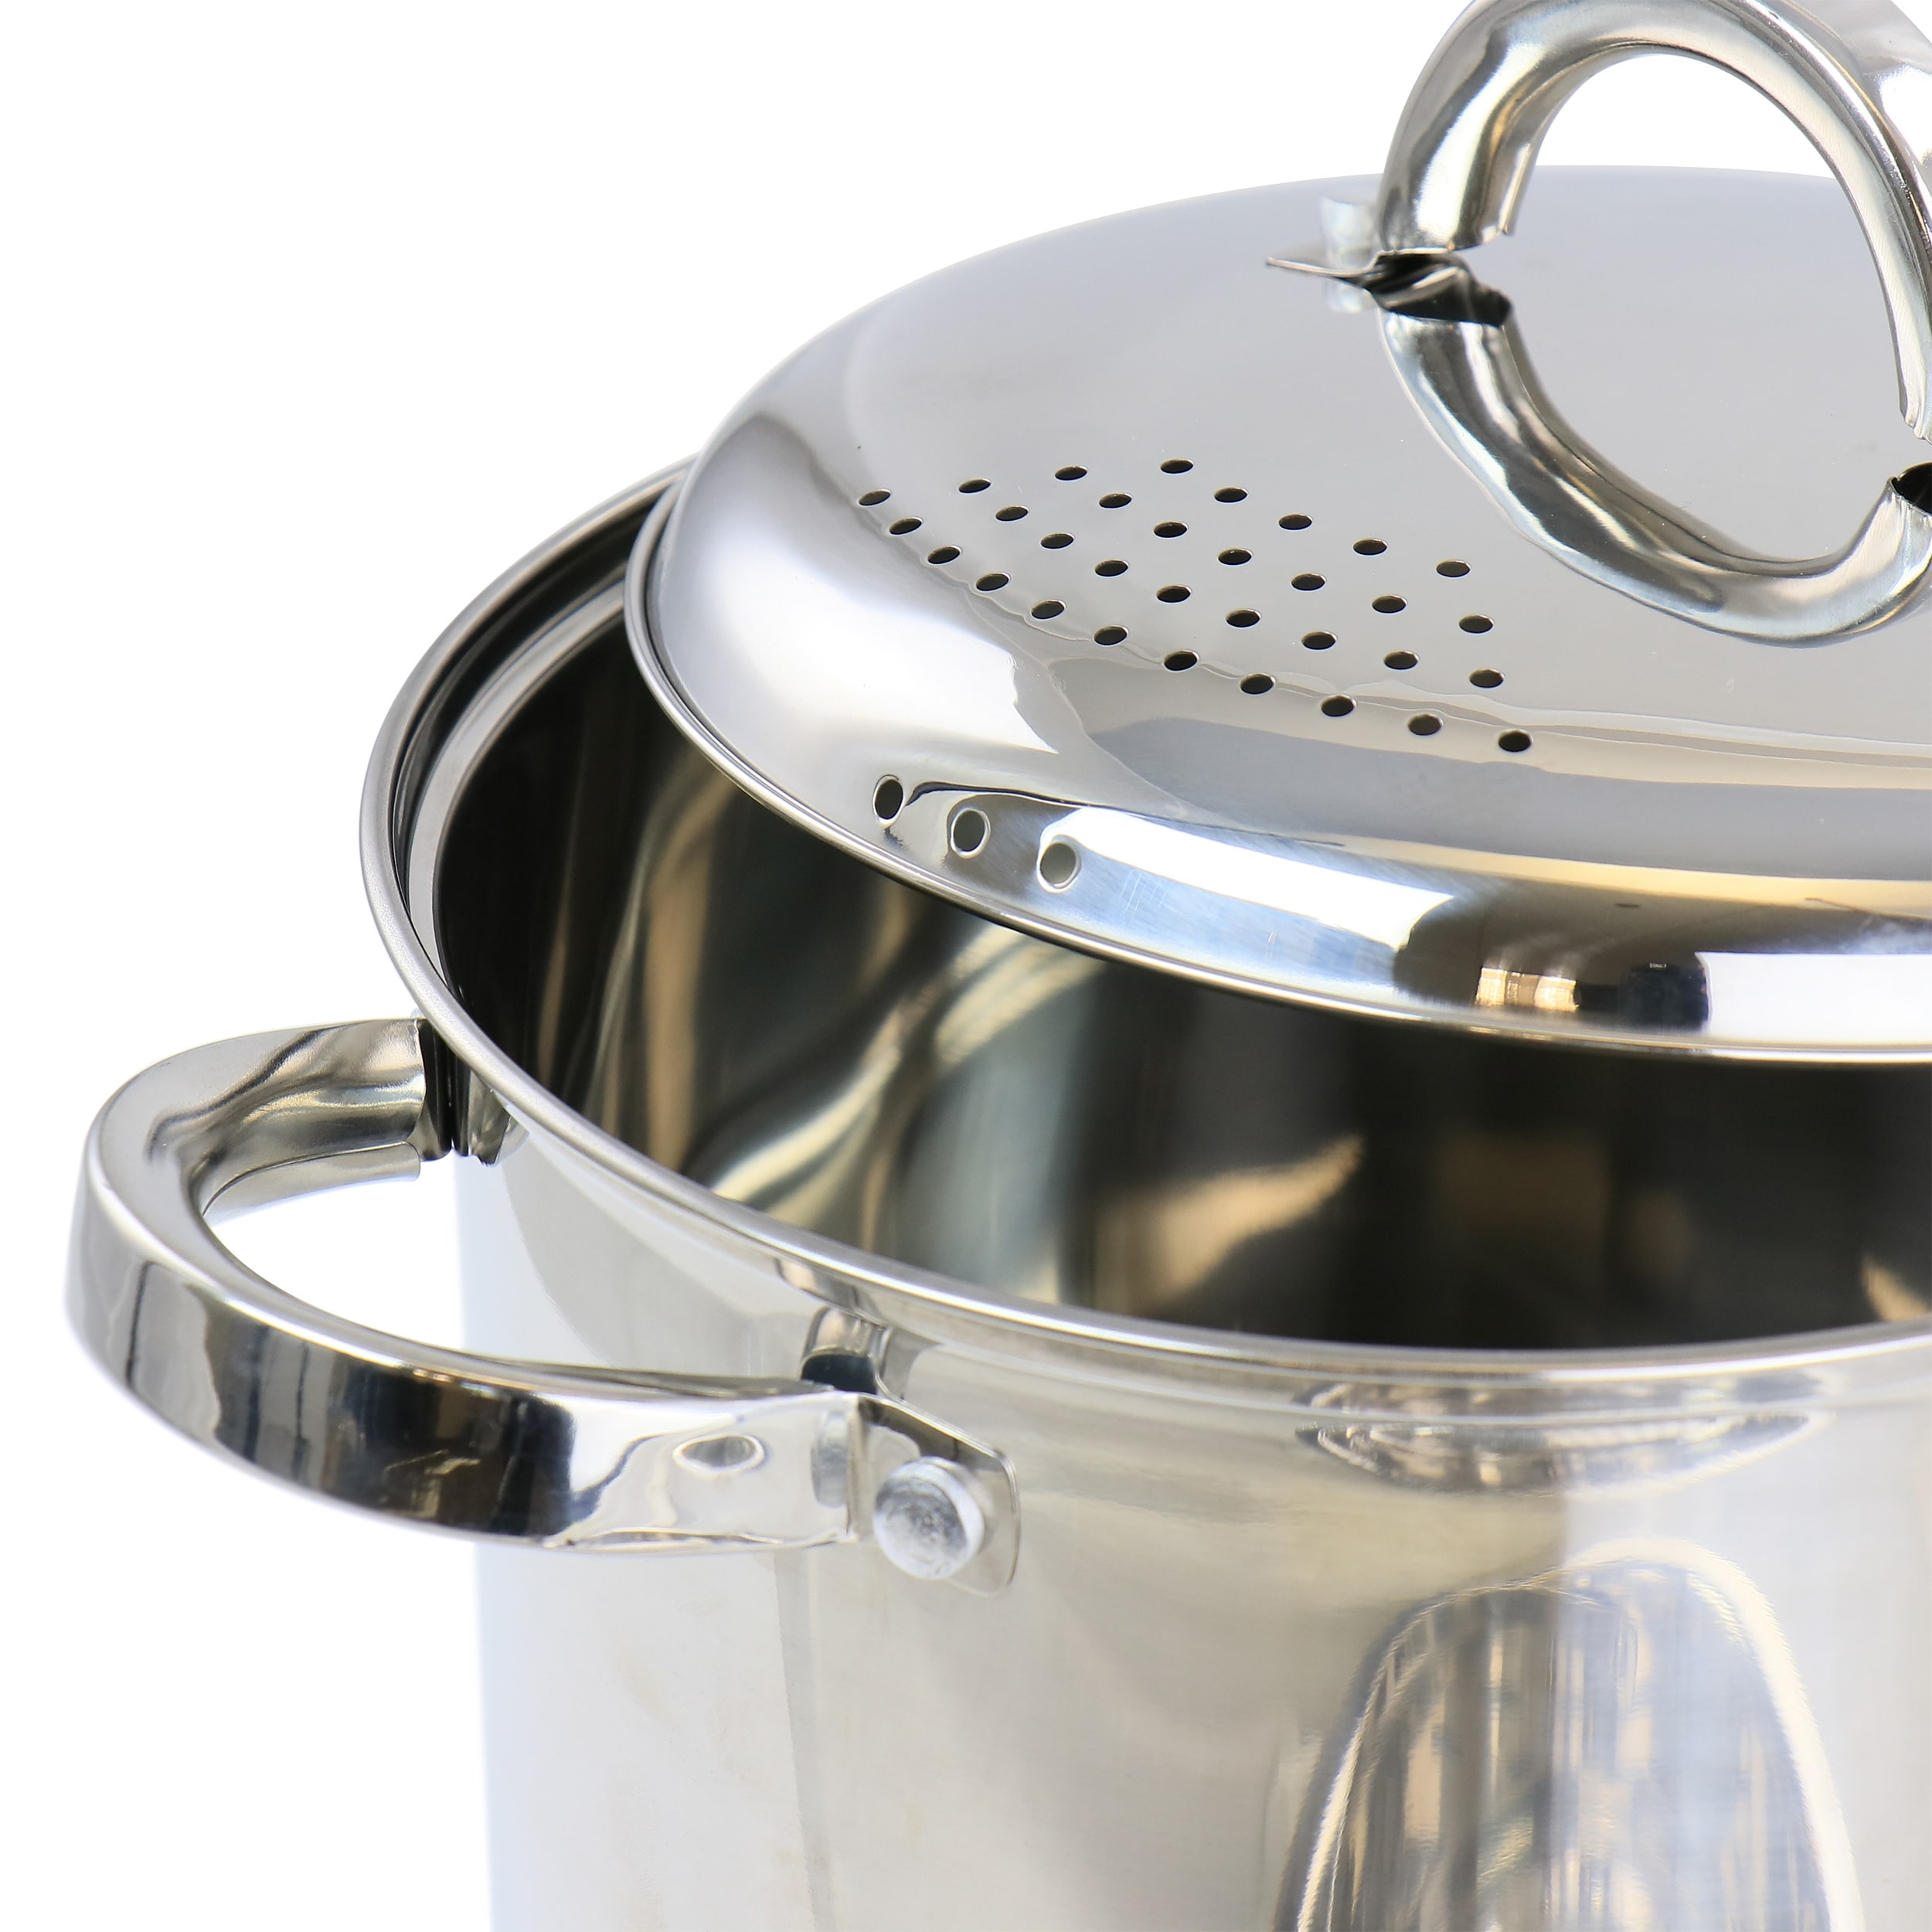 pasta pot with spout strainer lid induction –